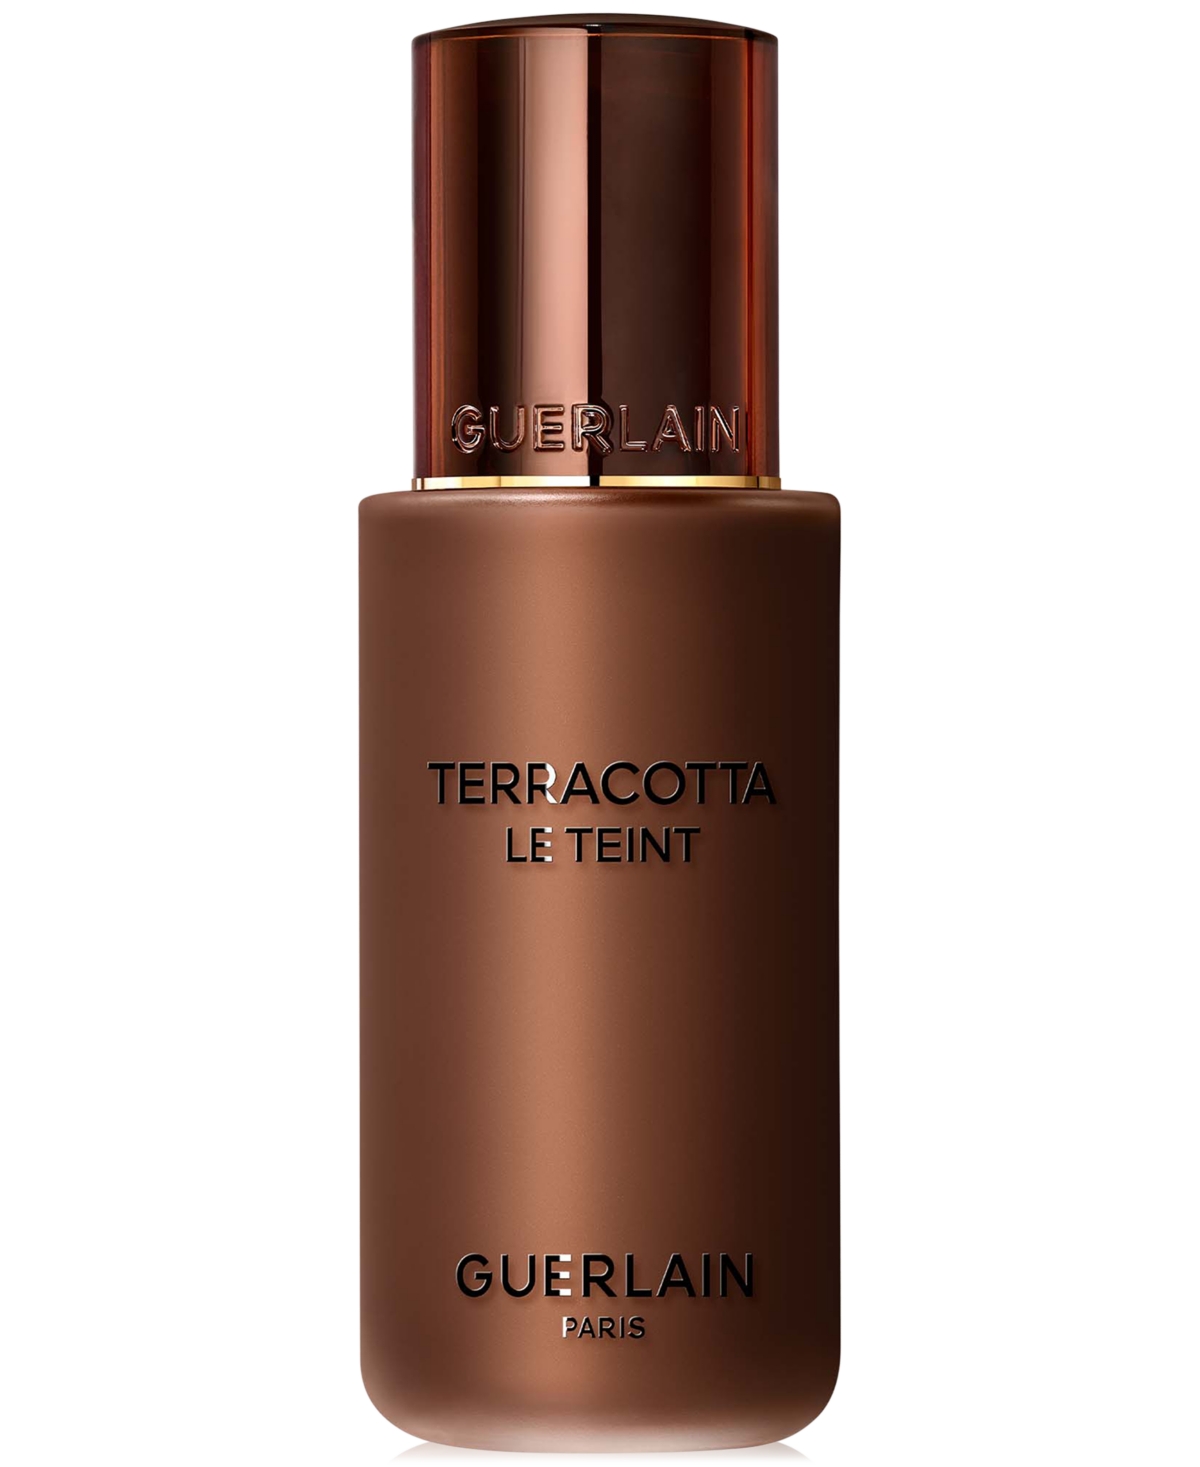 Guerlain Terracotta Le Teint Healthy Glow Foundation In N Dark Skin With Neutral Beige Undertone